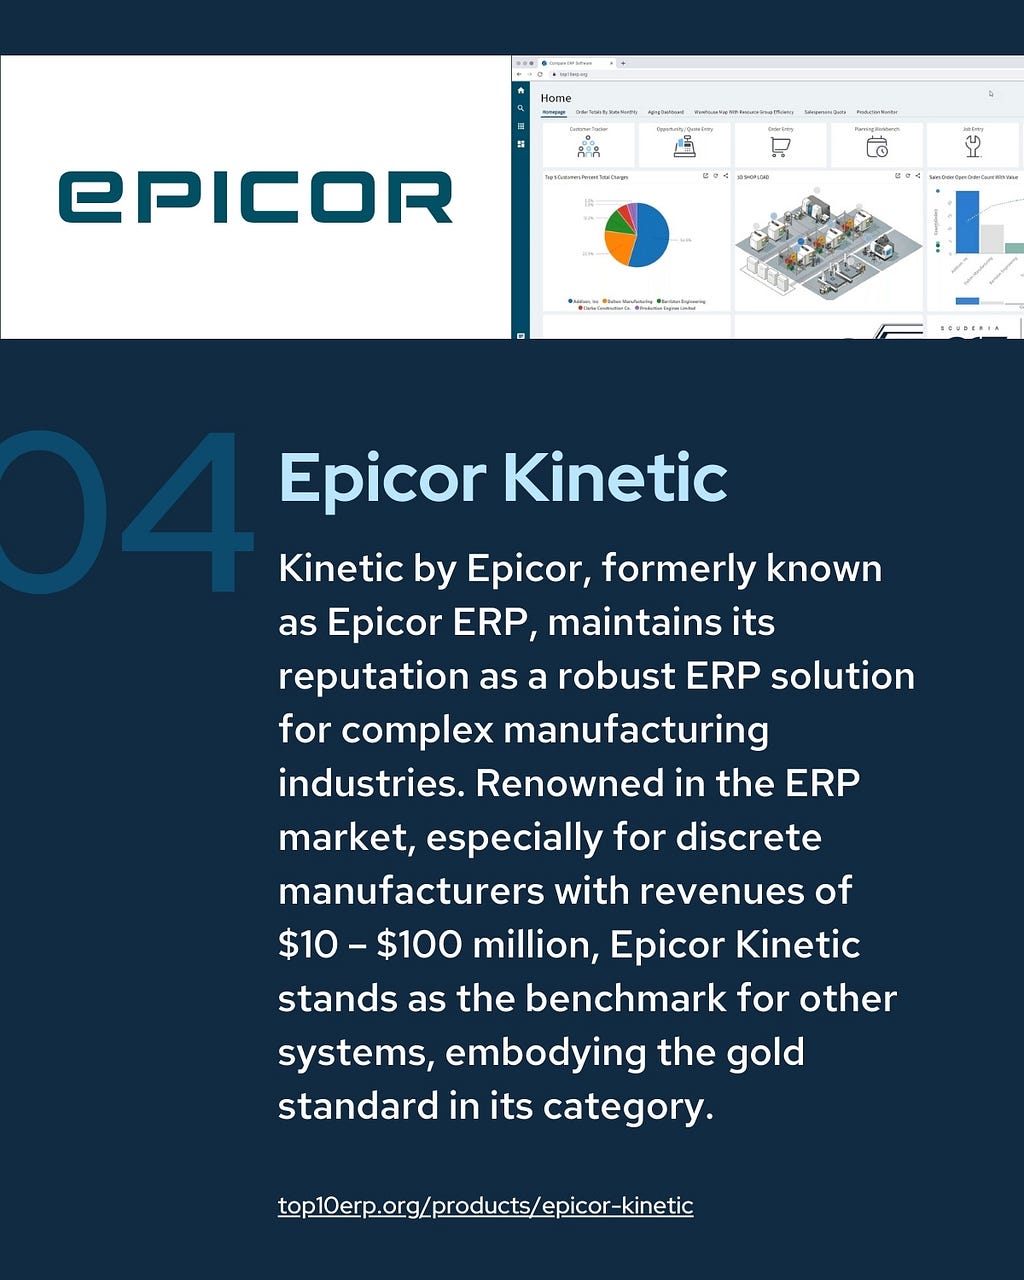 Epicor Kinetic Features